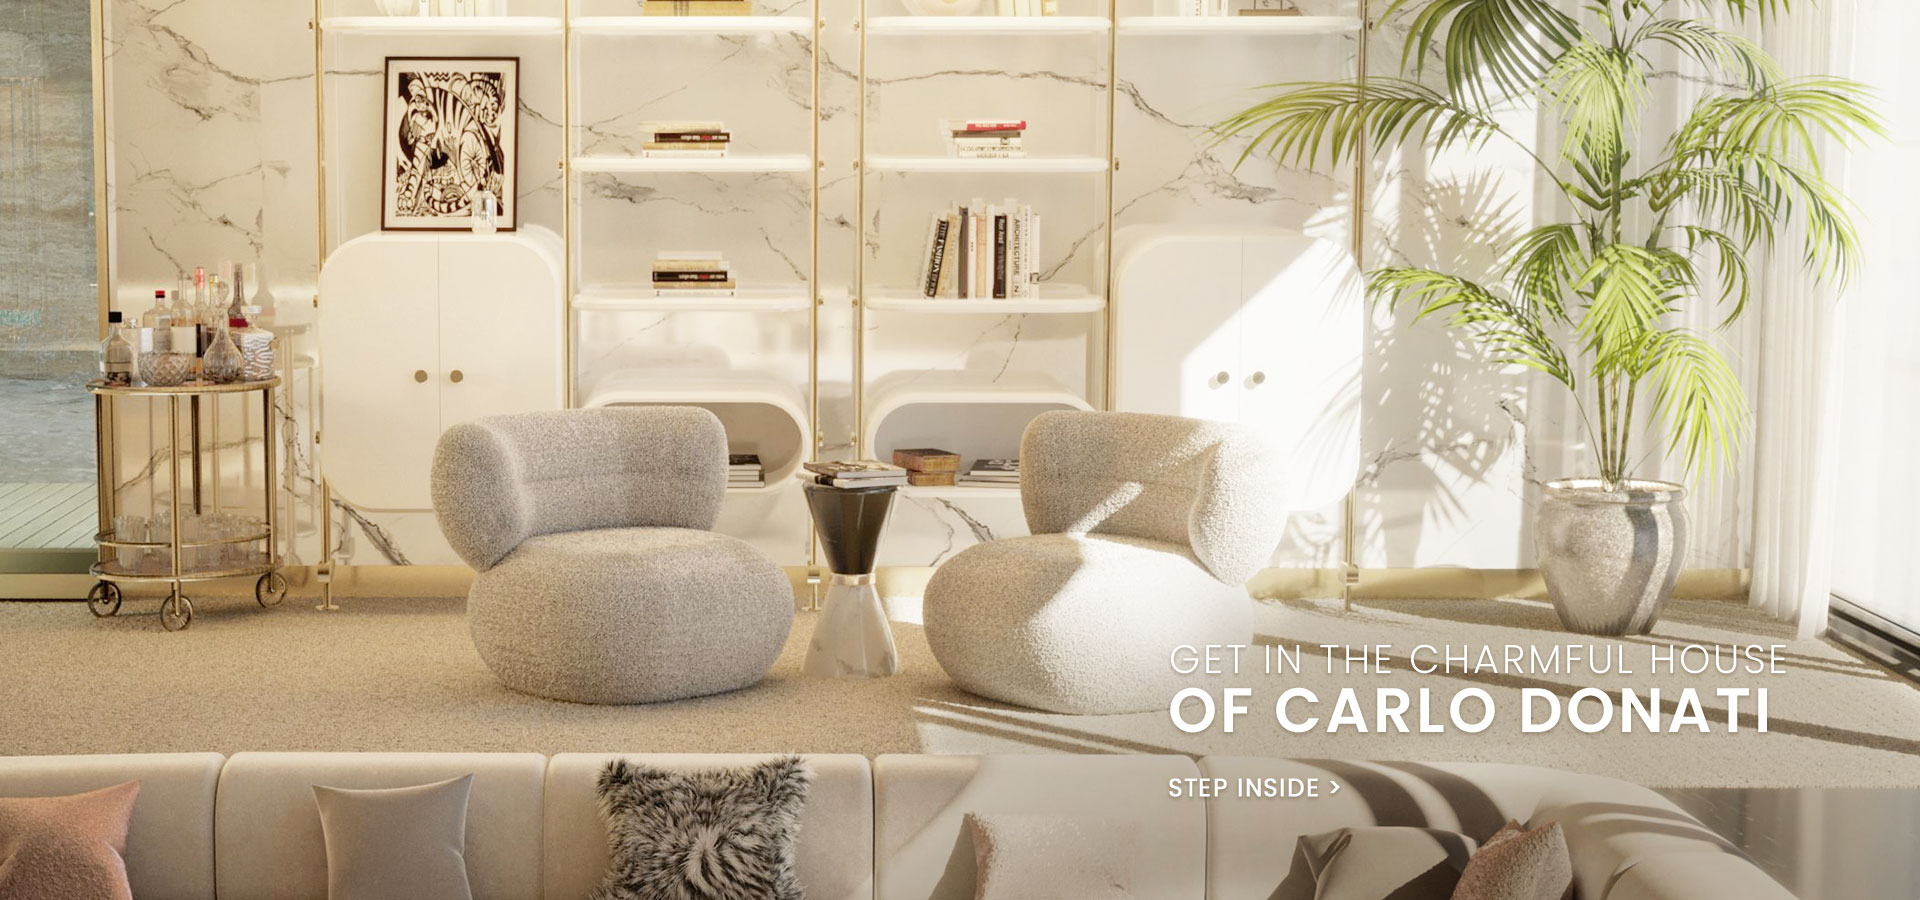 carlodonatihousevt bedroom decor Bedroom Decor: Discover How to Make Your Bedroom Look More Luxurious saint tropez carlo donati home